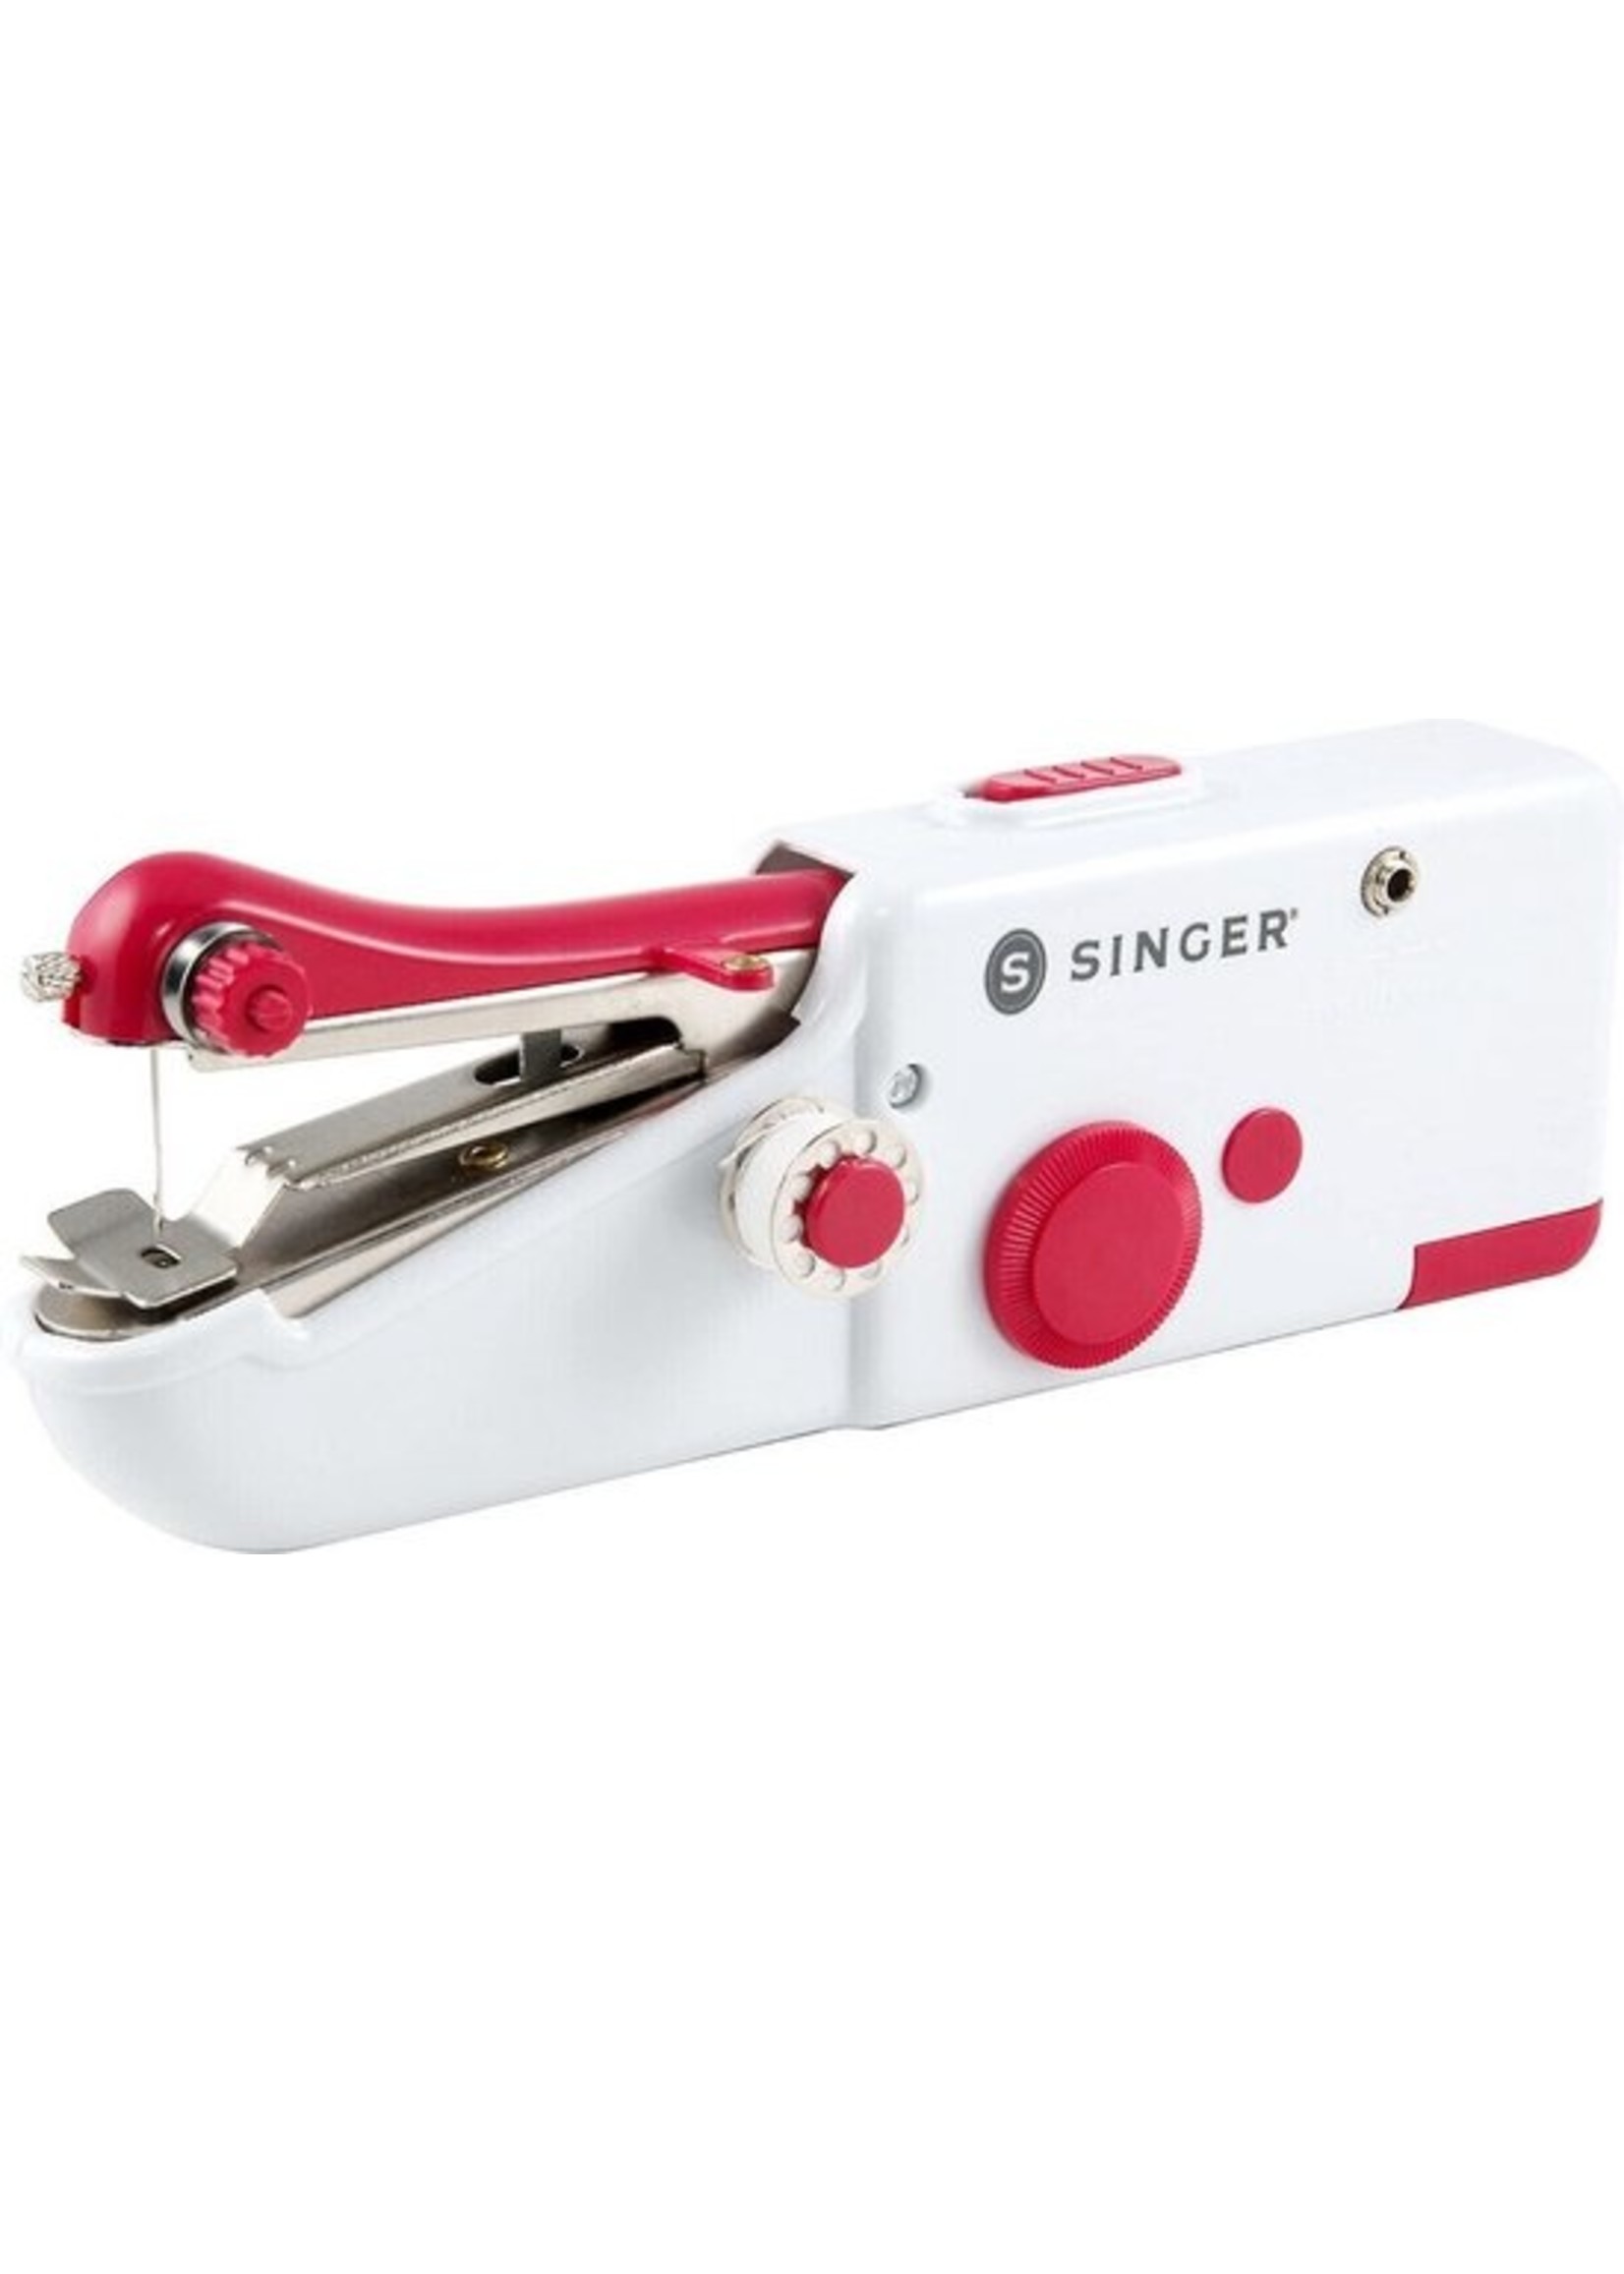 Singer Singer - Handheld Mending Machine /Sewing machines koopjeshoek